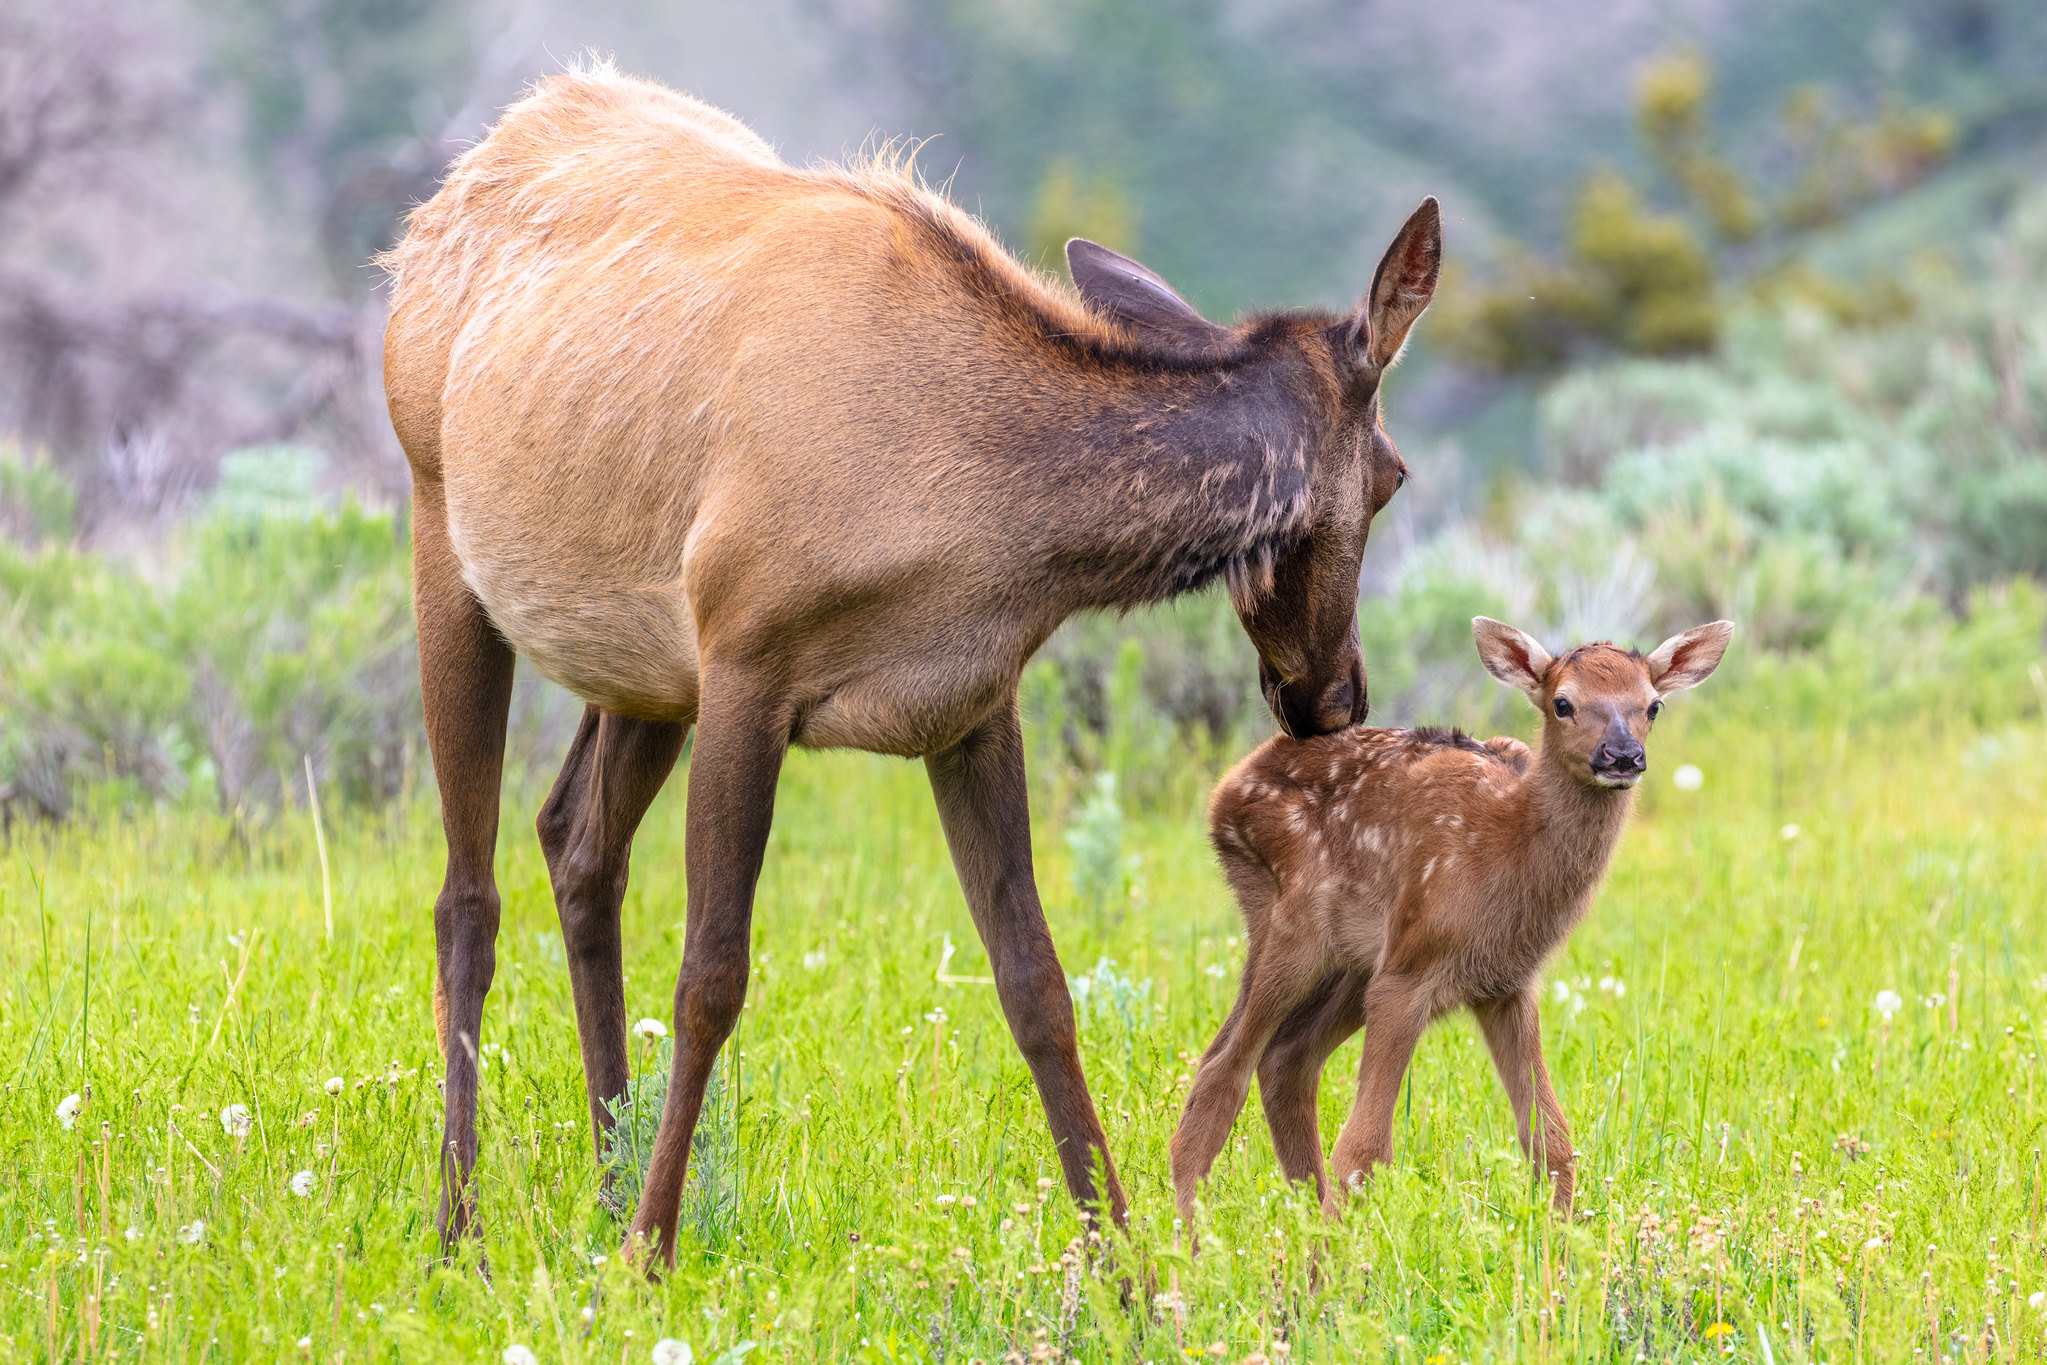 Mother elk grooming calf